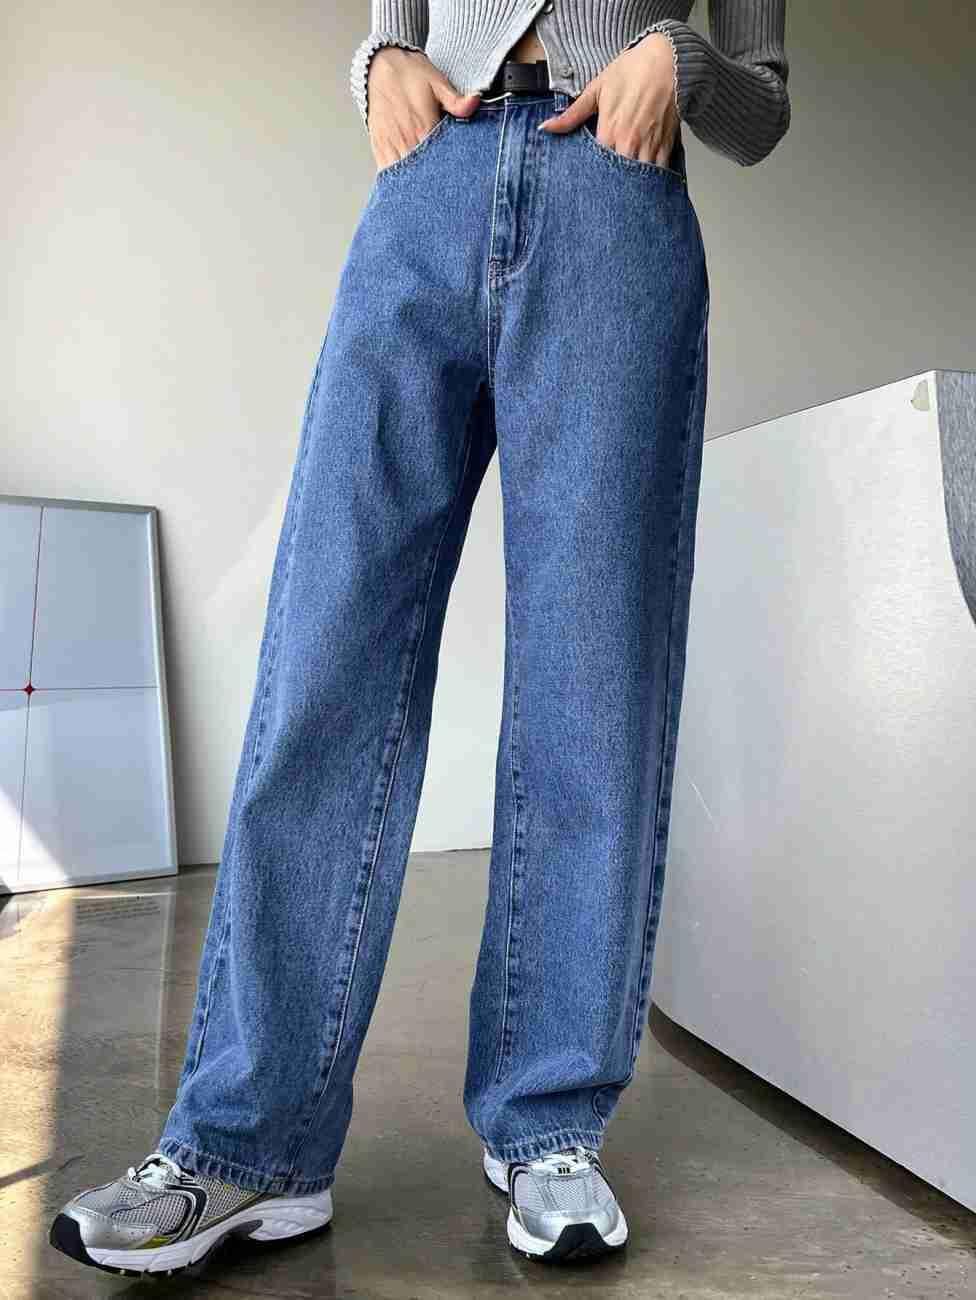 Dimco Vinco Bell Bottom Style Jeans For Women's